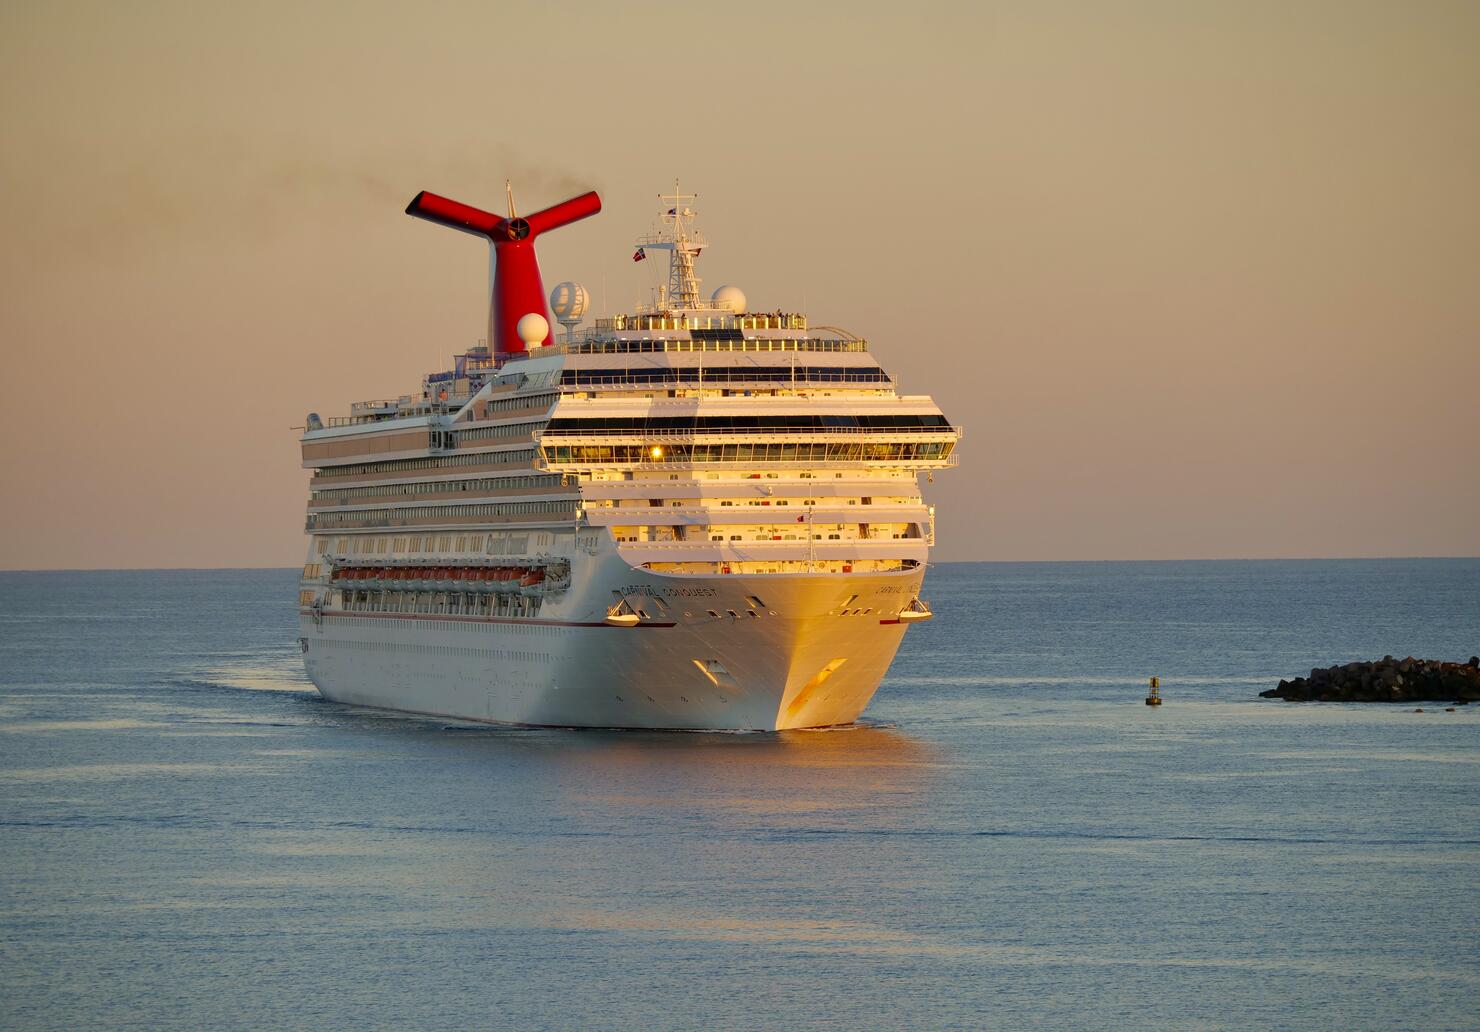 Cruise ship "Carnival Conquest" arrival at Nassau port.